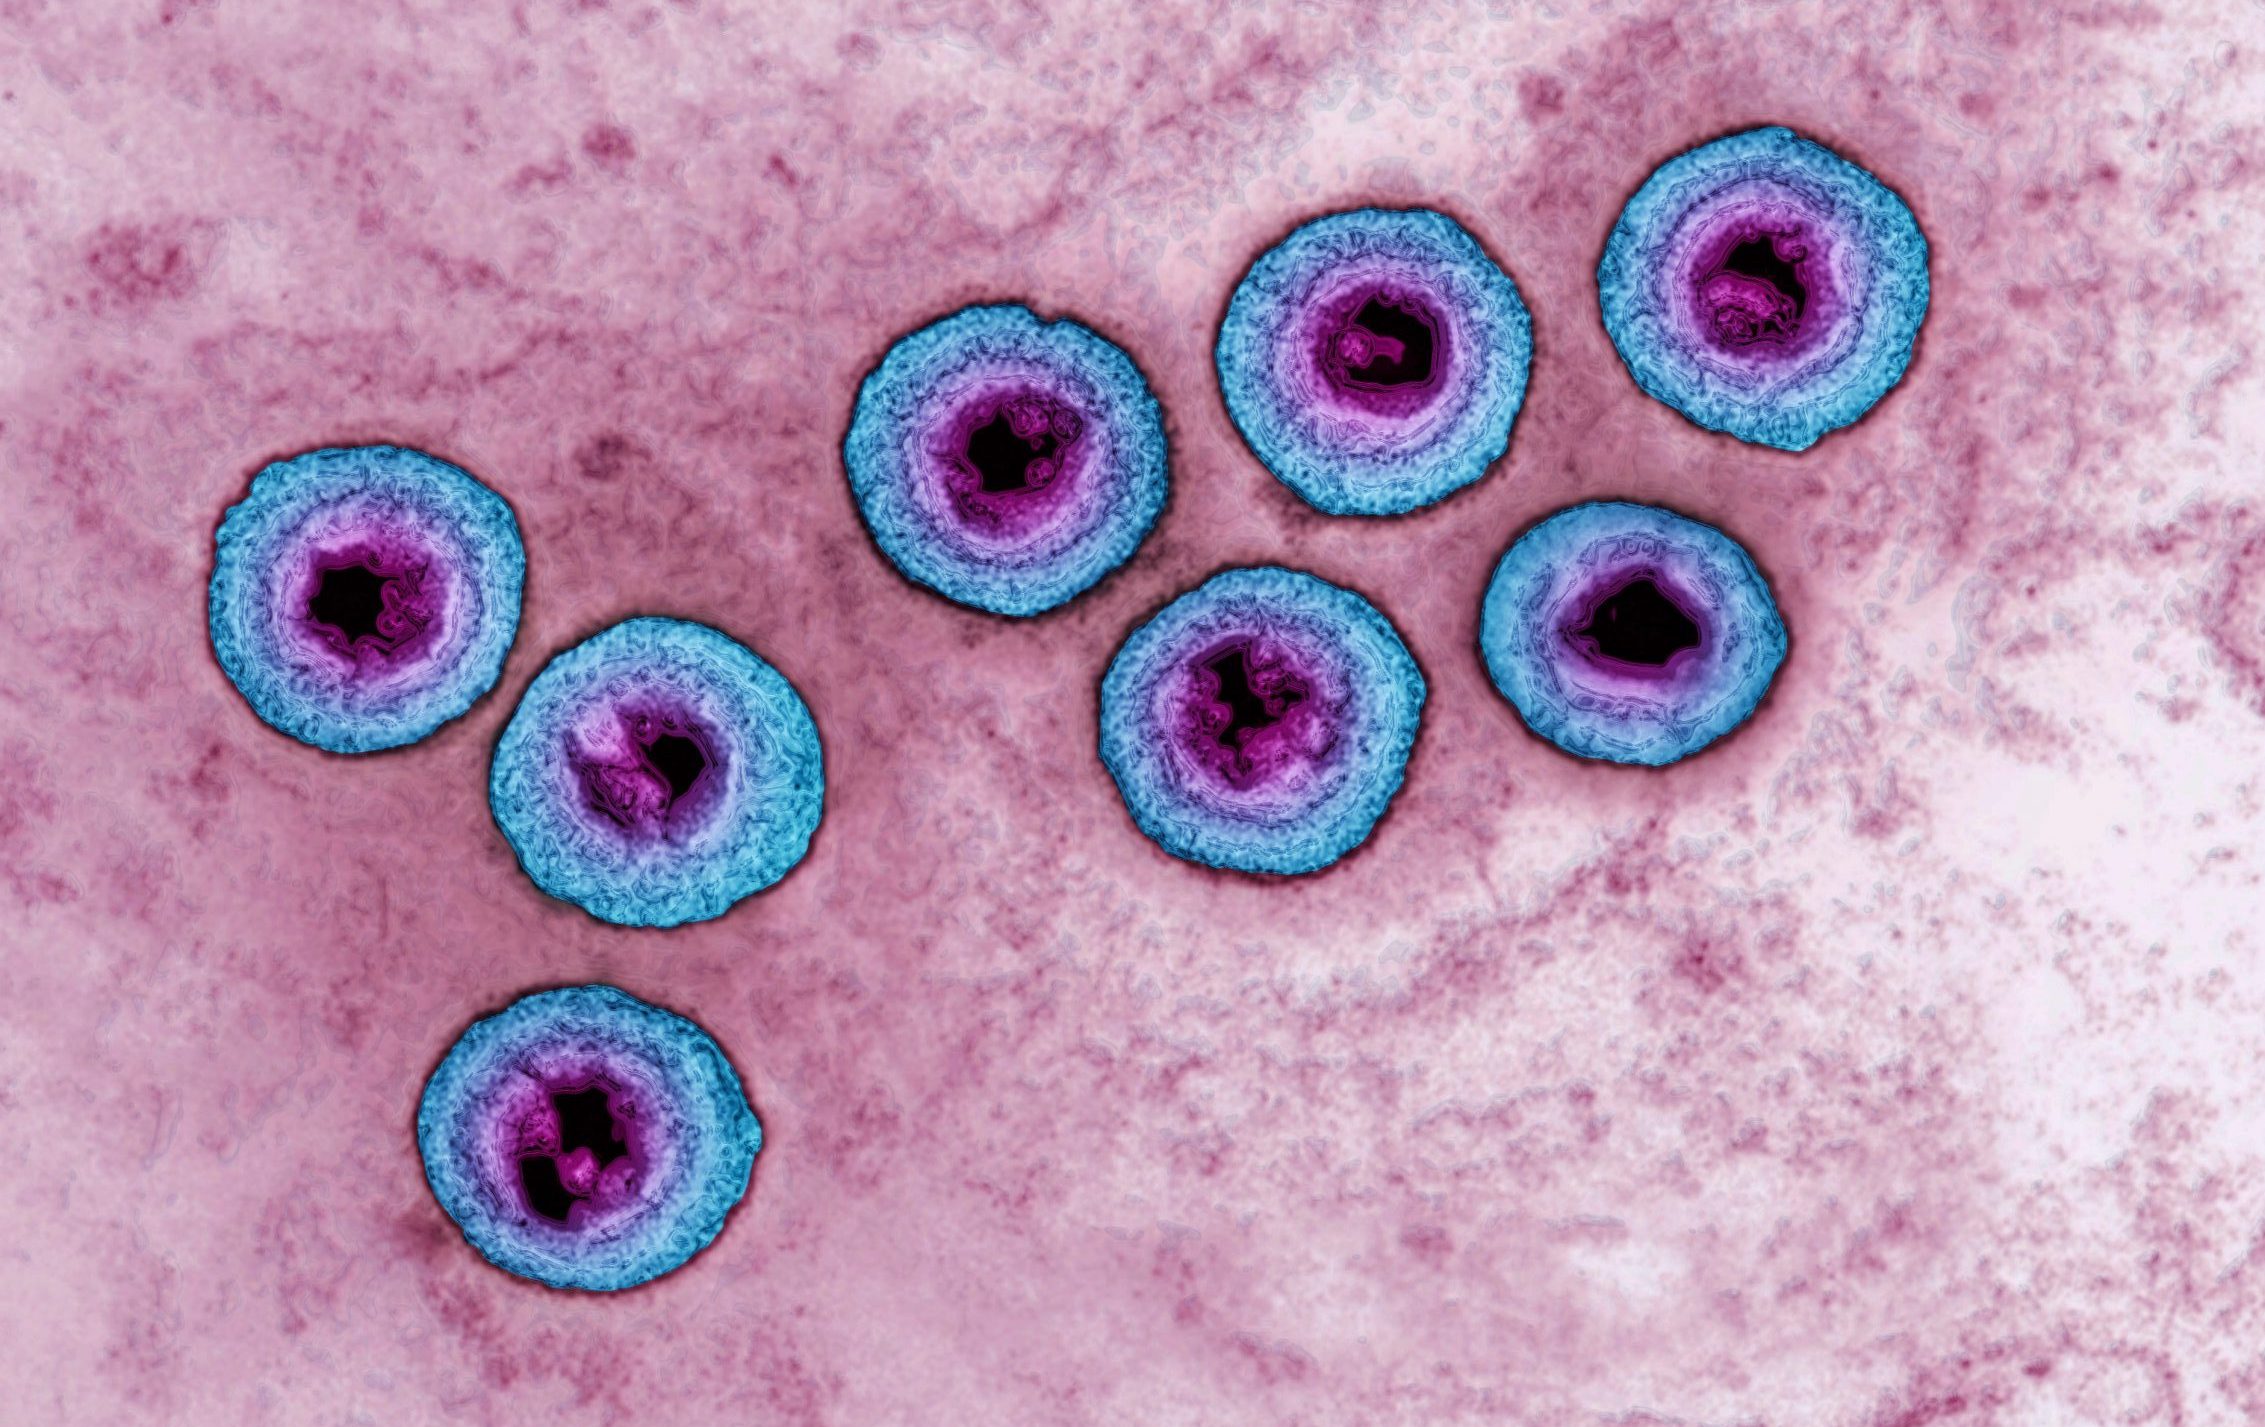 Microscopic image of Herpes Simplex Virus